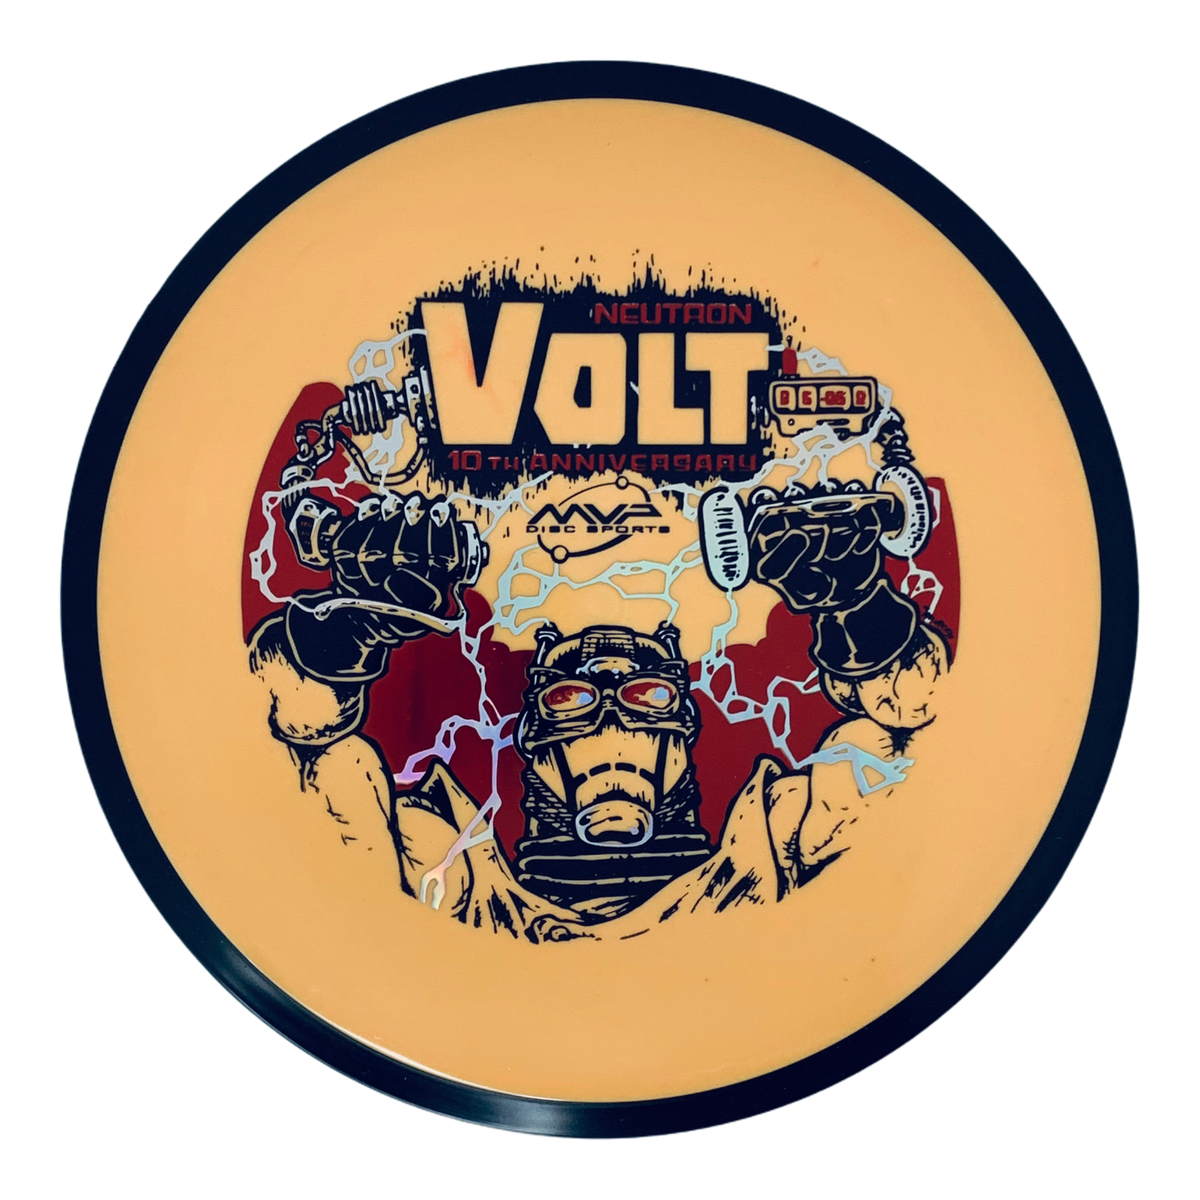 MVP Neutron Volt - 10 Year Anniversary Special Edition